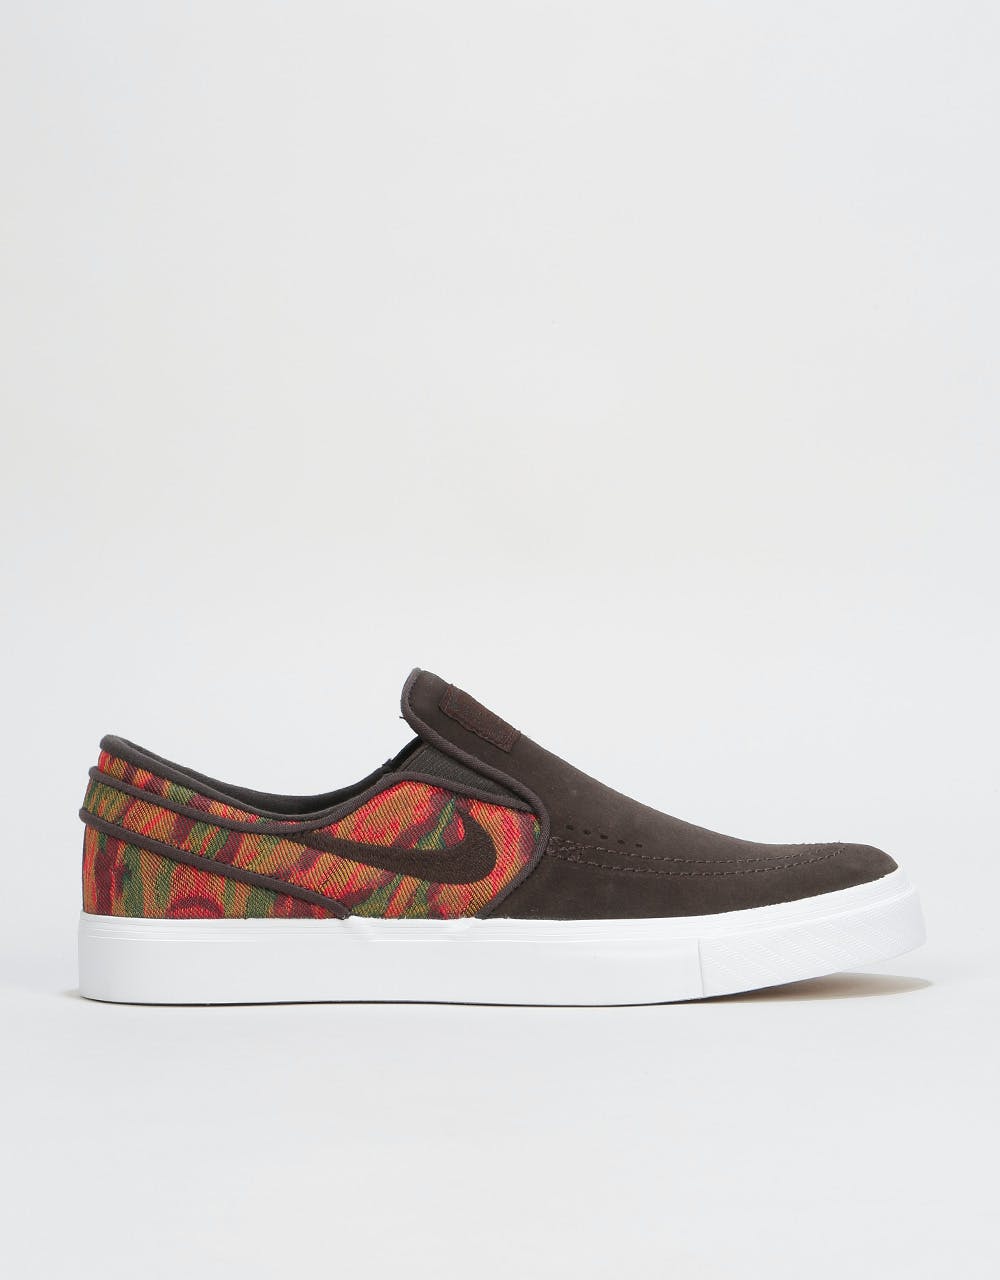 Nike SB Zoom Stefan Janoski Slip Premium Skate Shoes - Velvet Brown